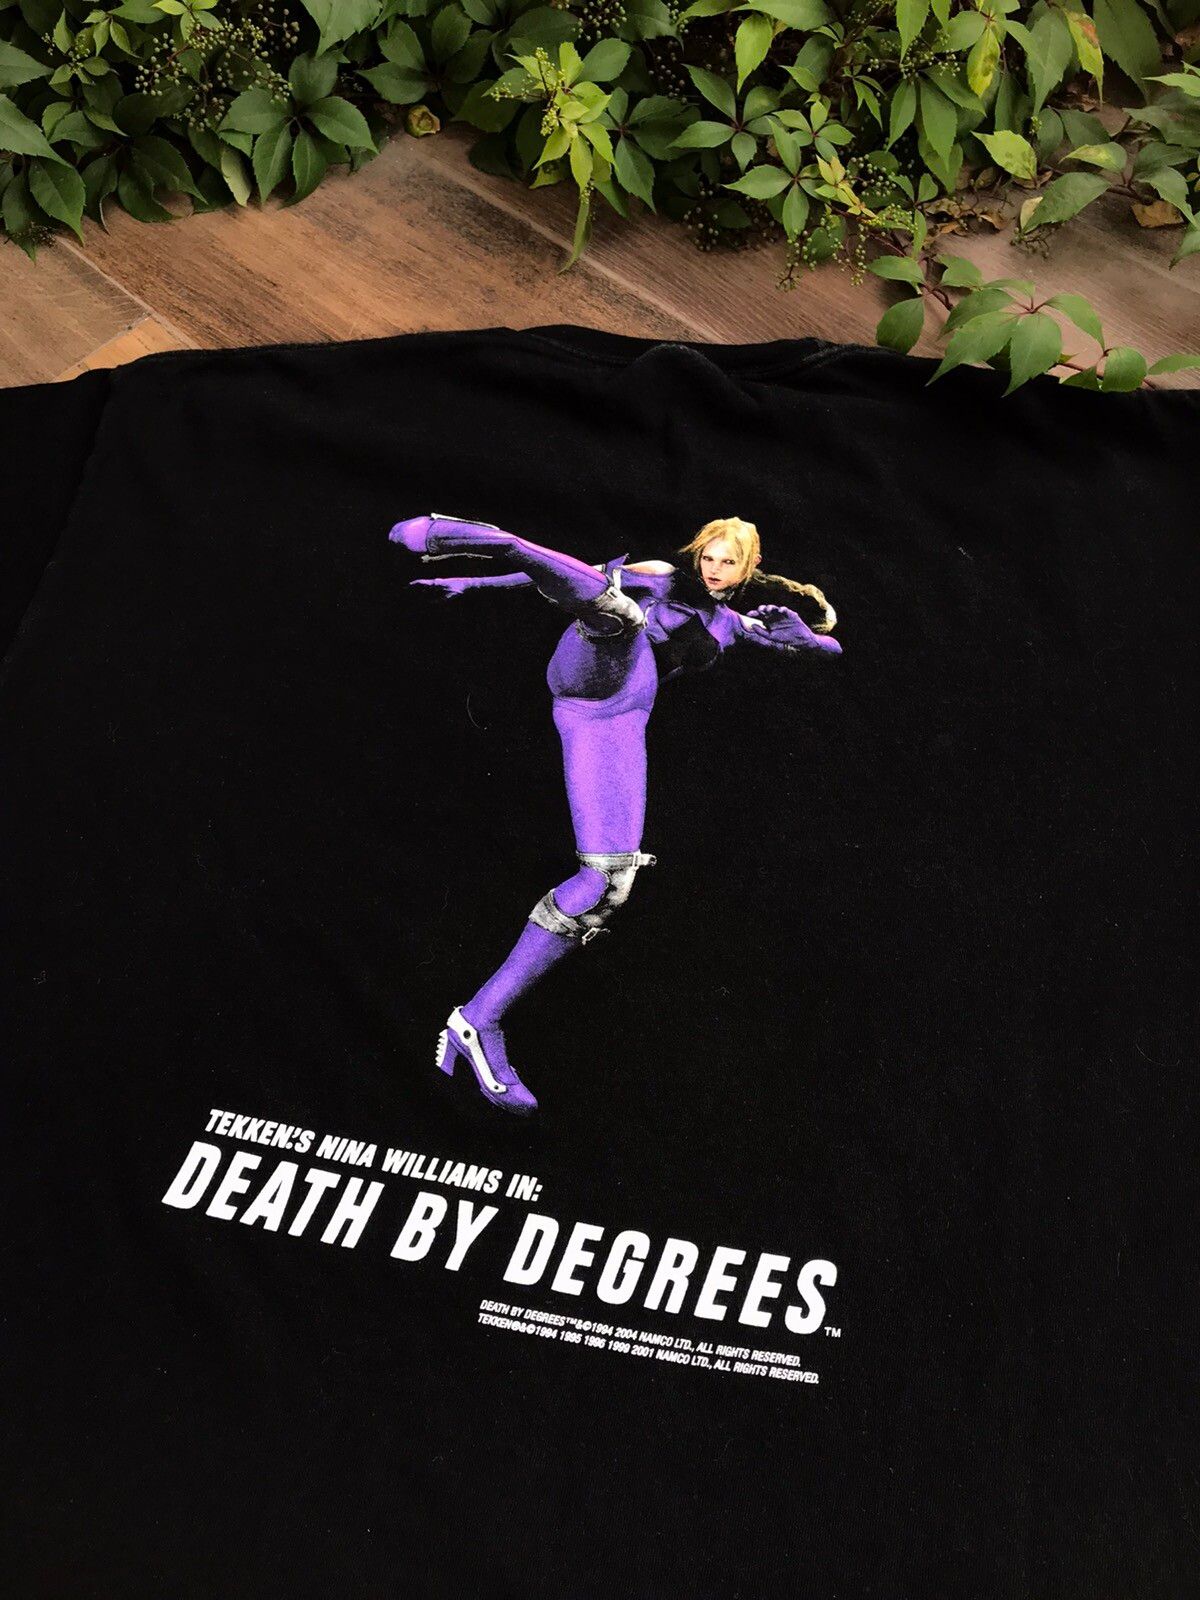 Vintage 2001 Tekken's Nina Williams in: Death by Degrees Tee Shirt 